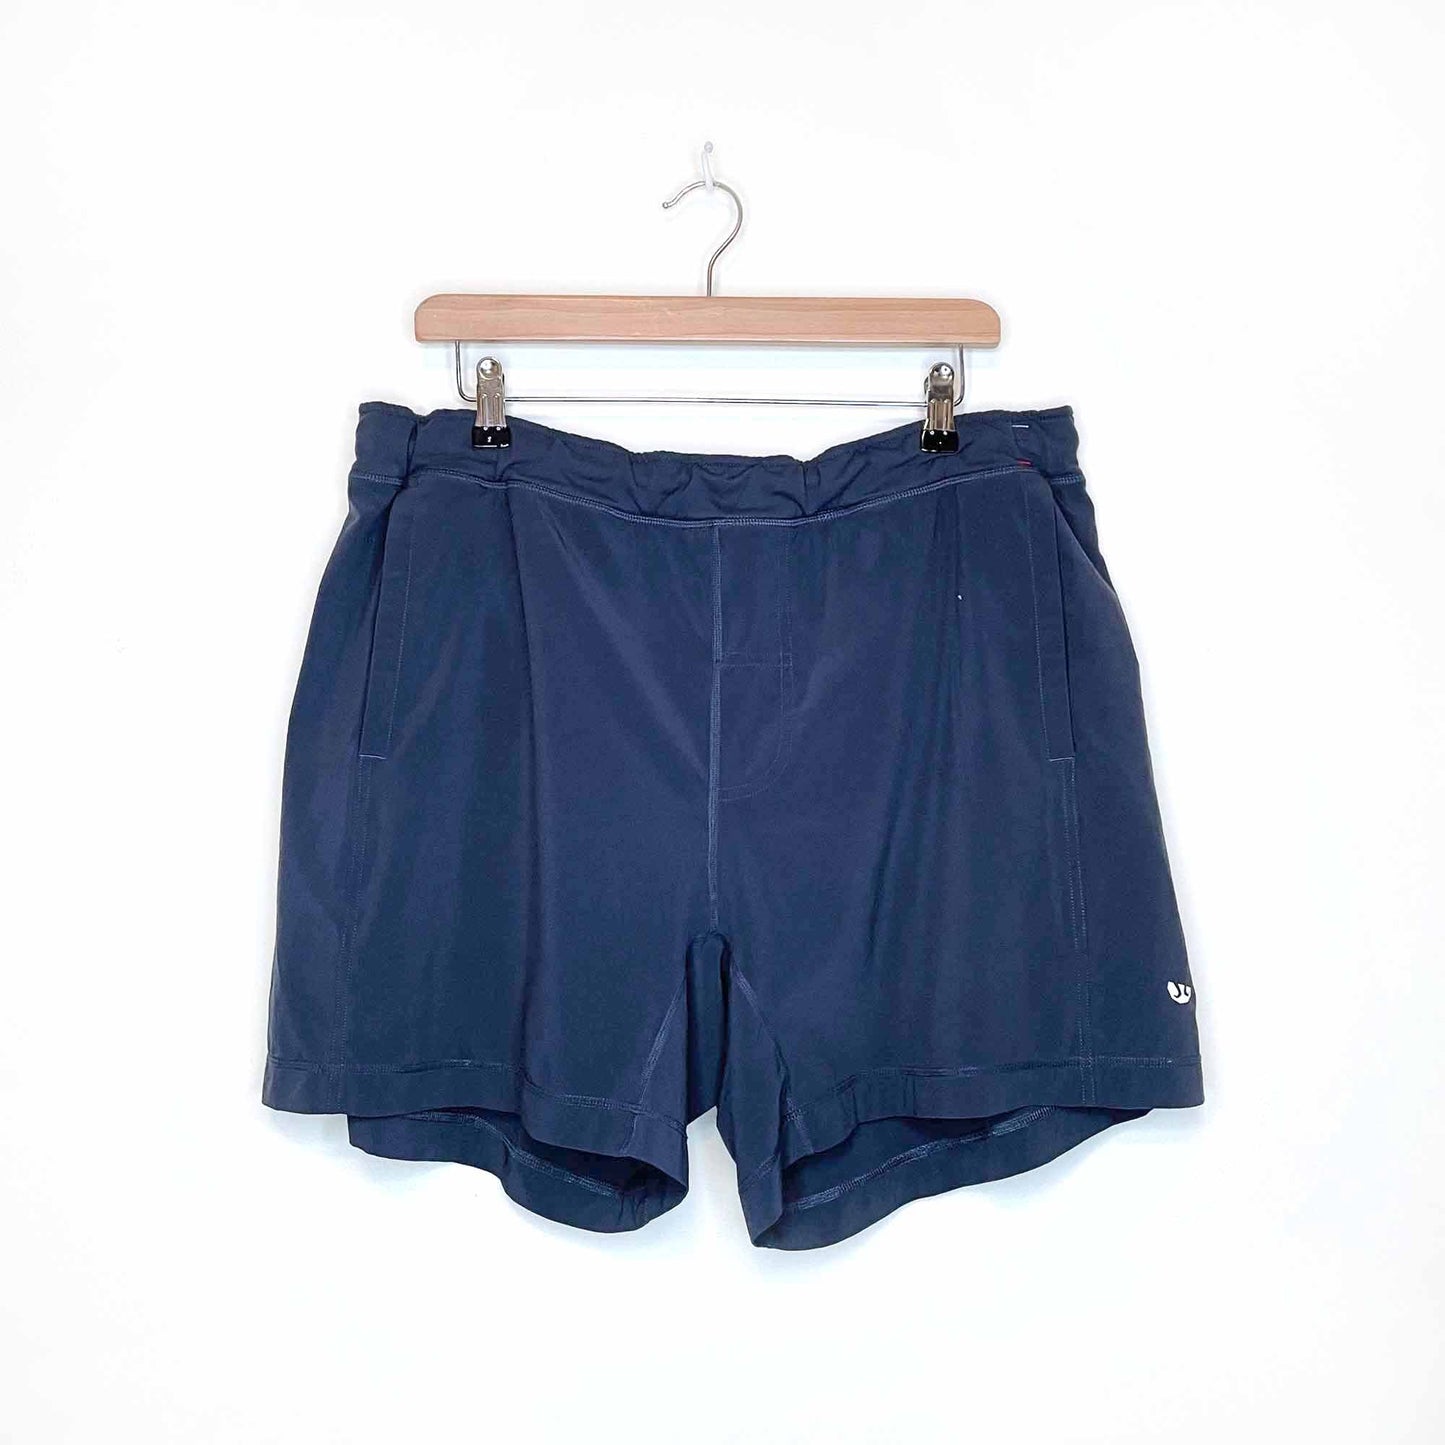 men's lululemon wet dry warm lined shorts - size xl